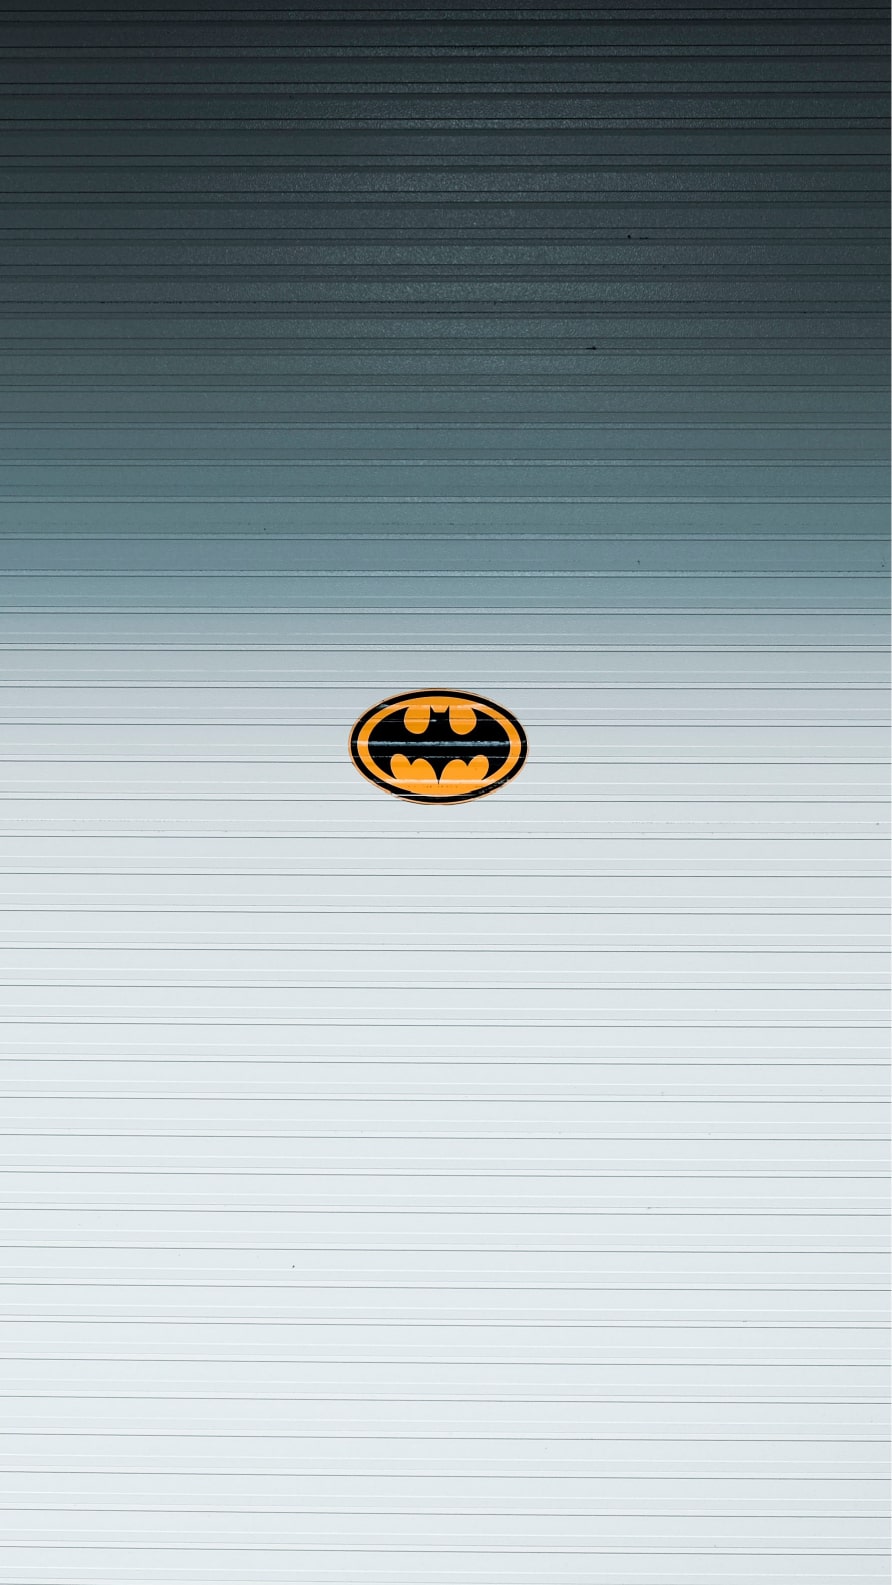 iPhone wallpapers featuring Batman